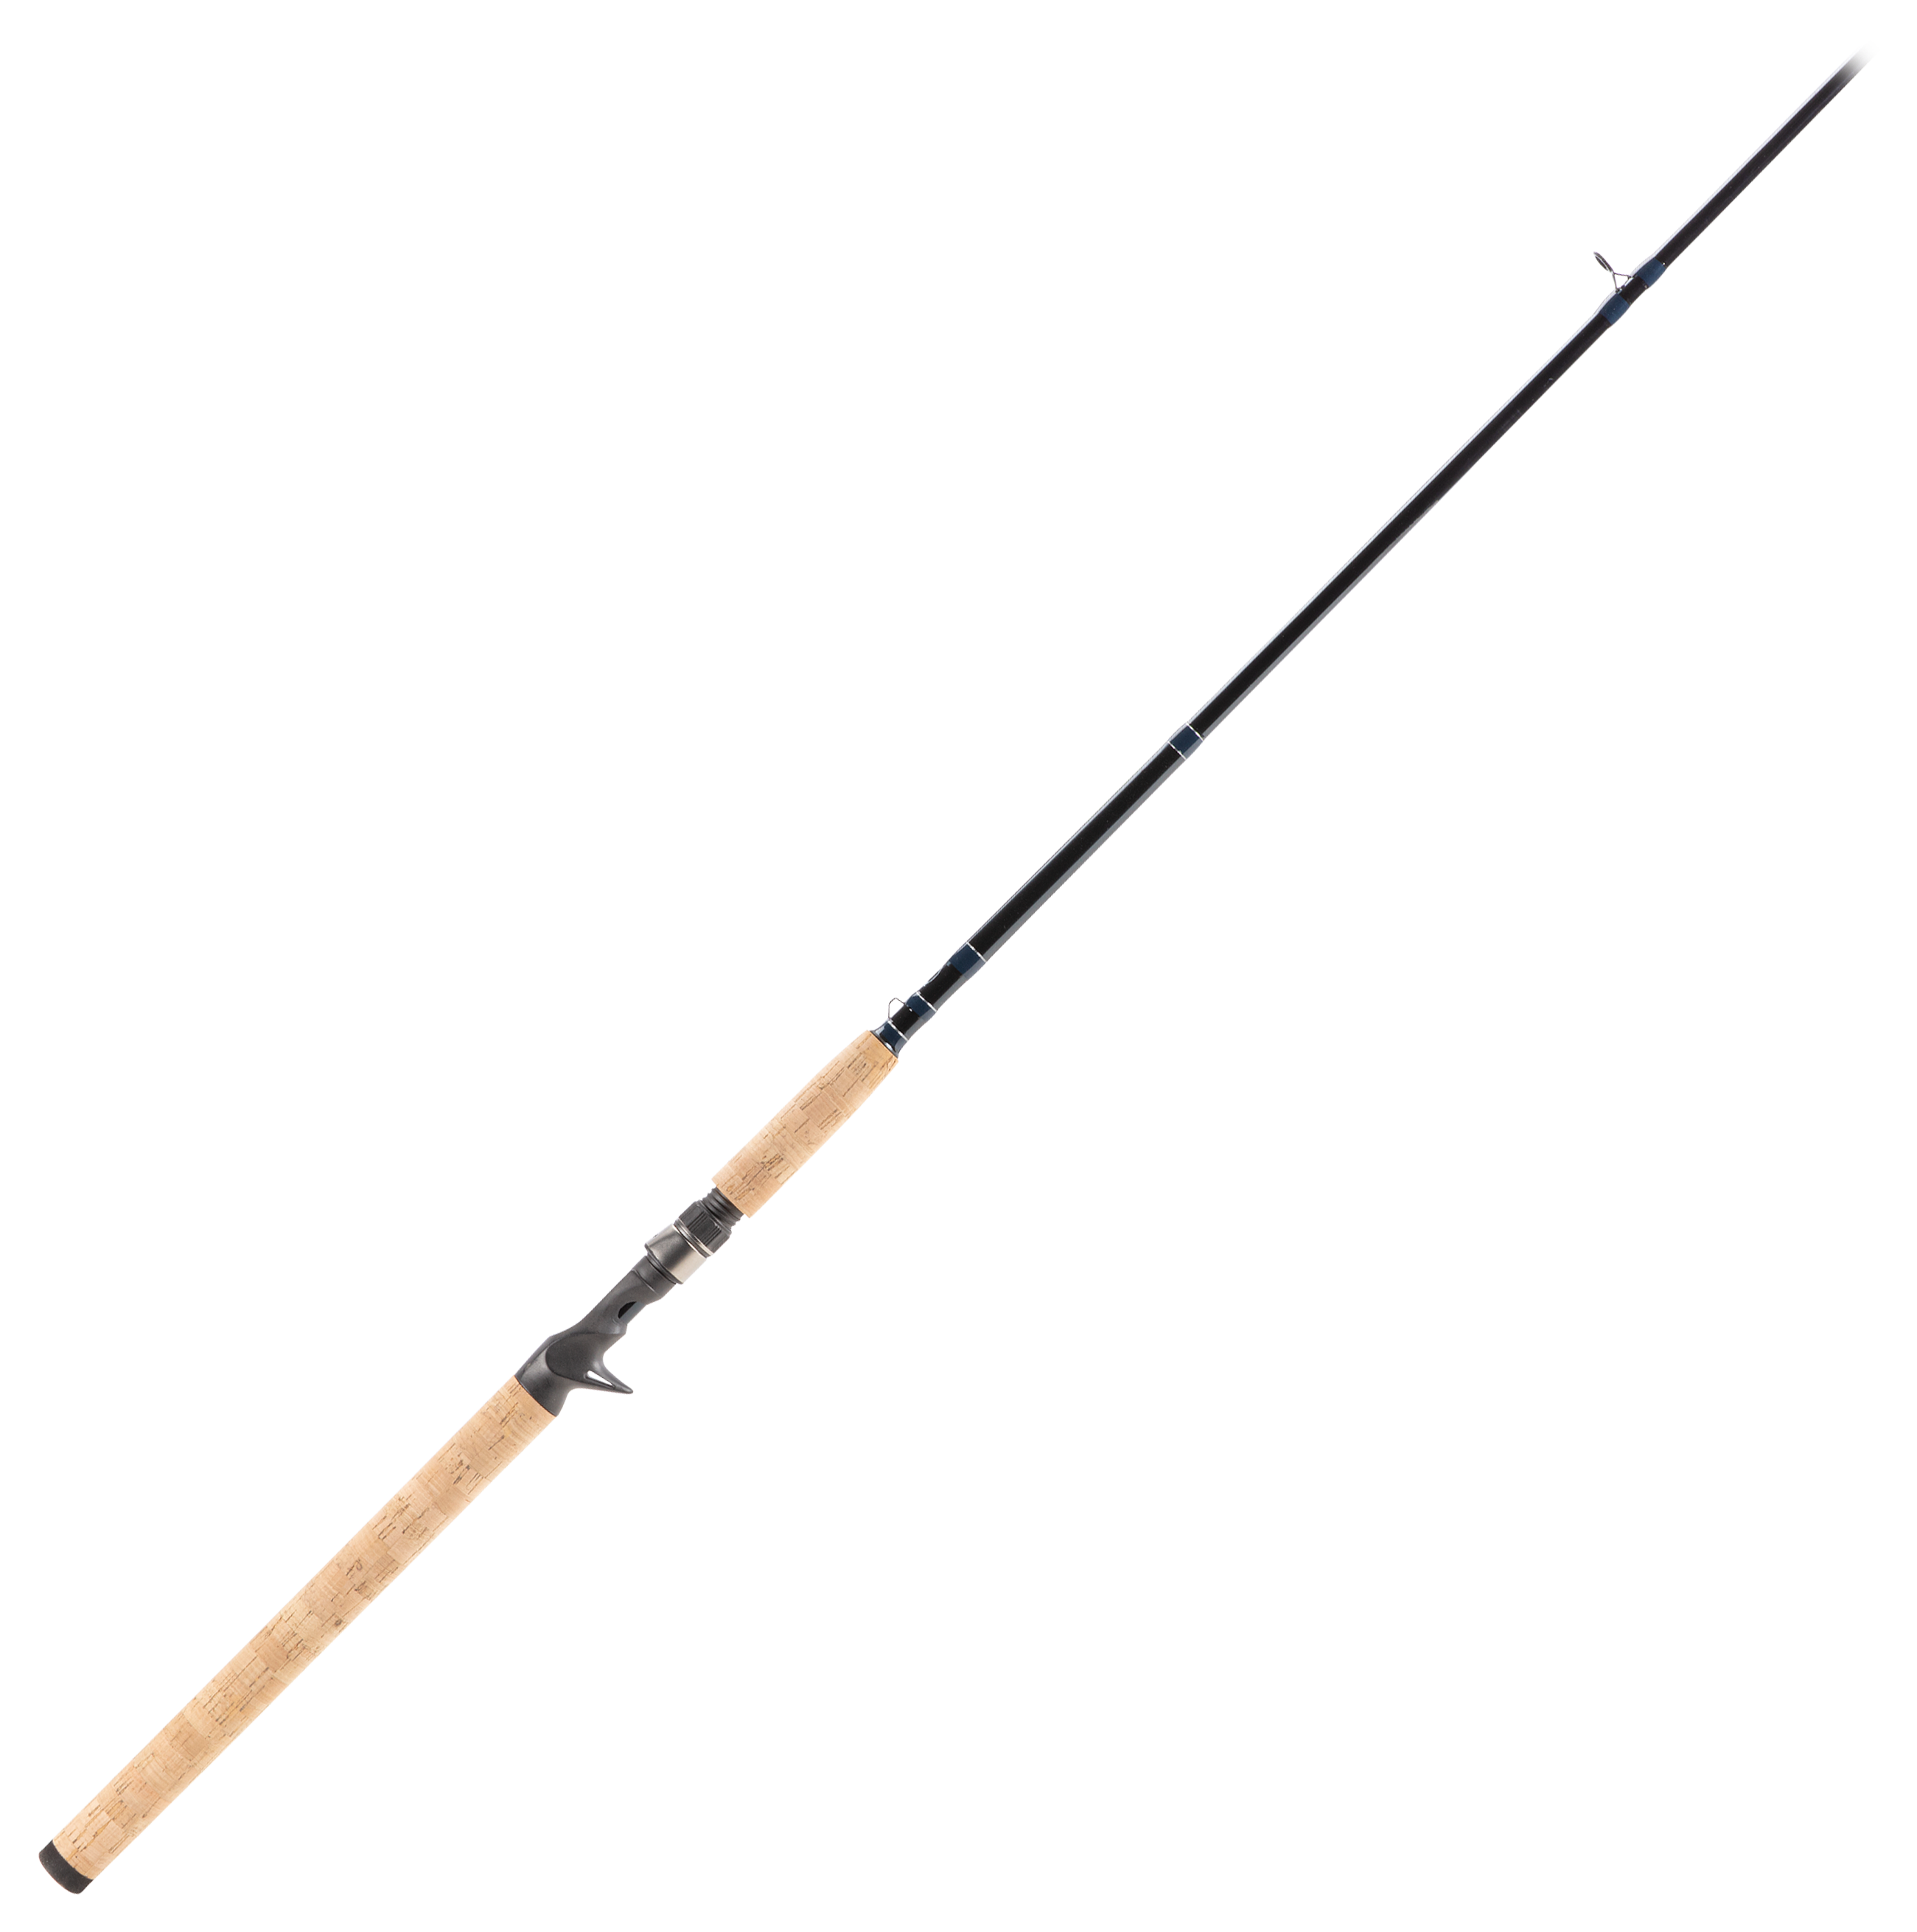 Bass Pro Shops Graphite Series Muskie Casting Rod - 7' - Medium Heavy